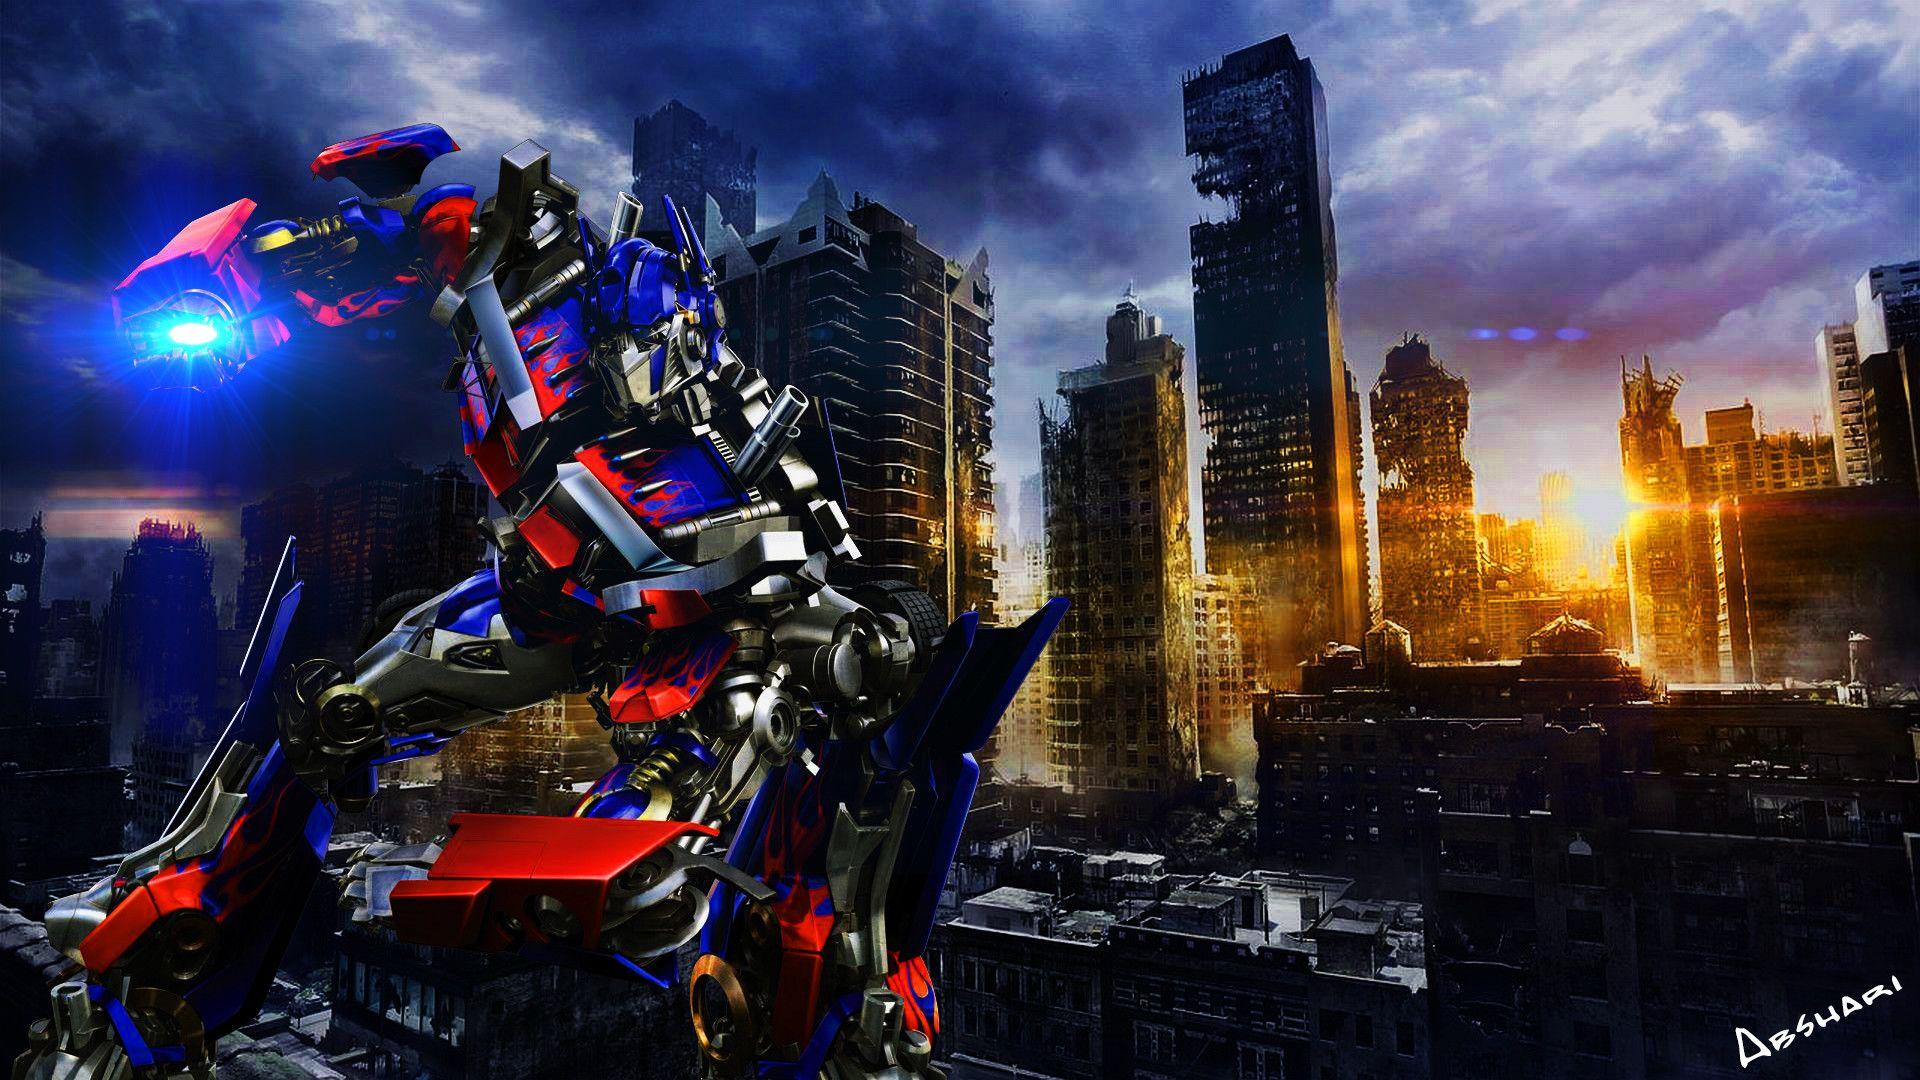 Optimus Prime Truck Wallpaper background picture